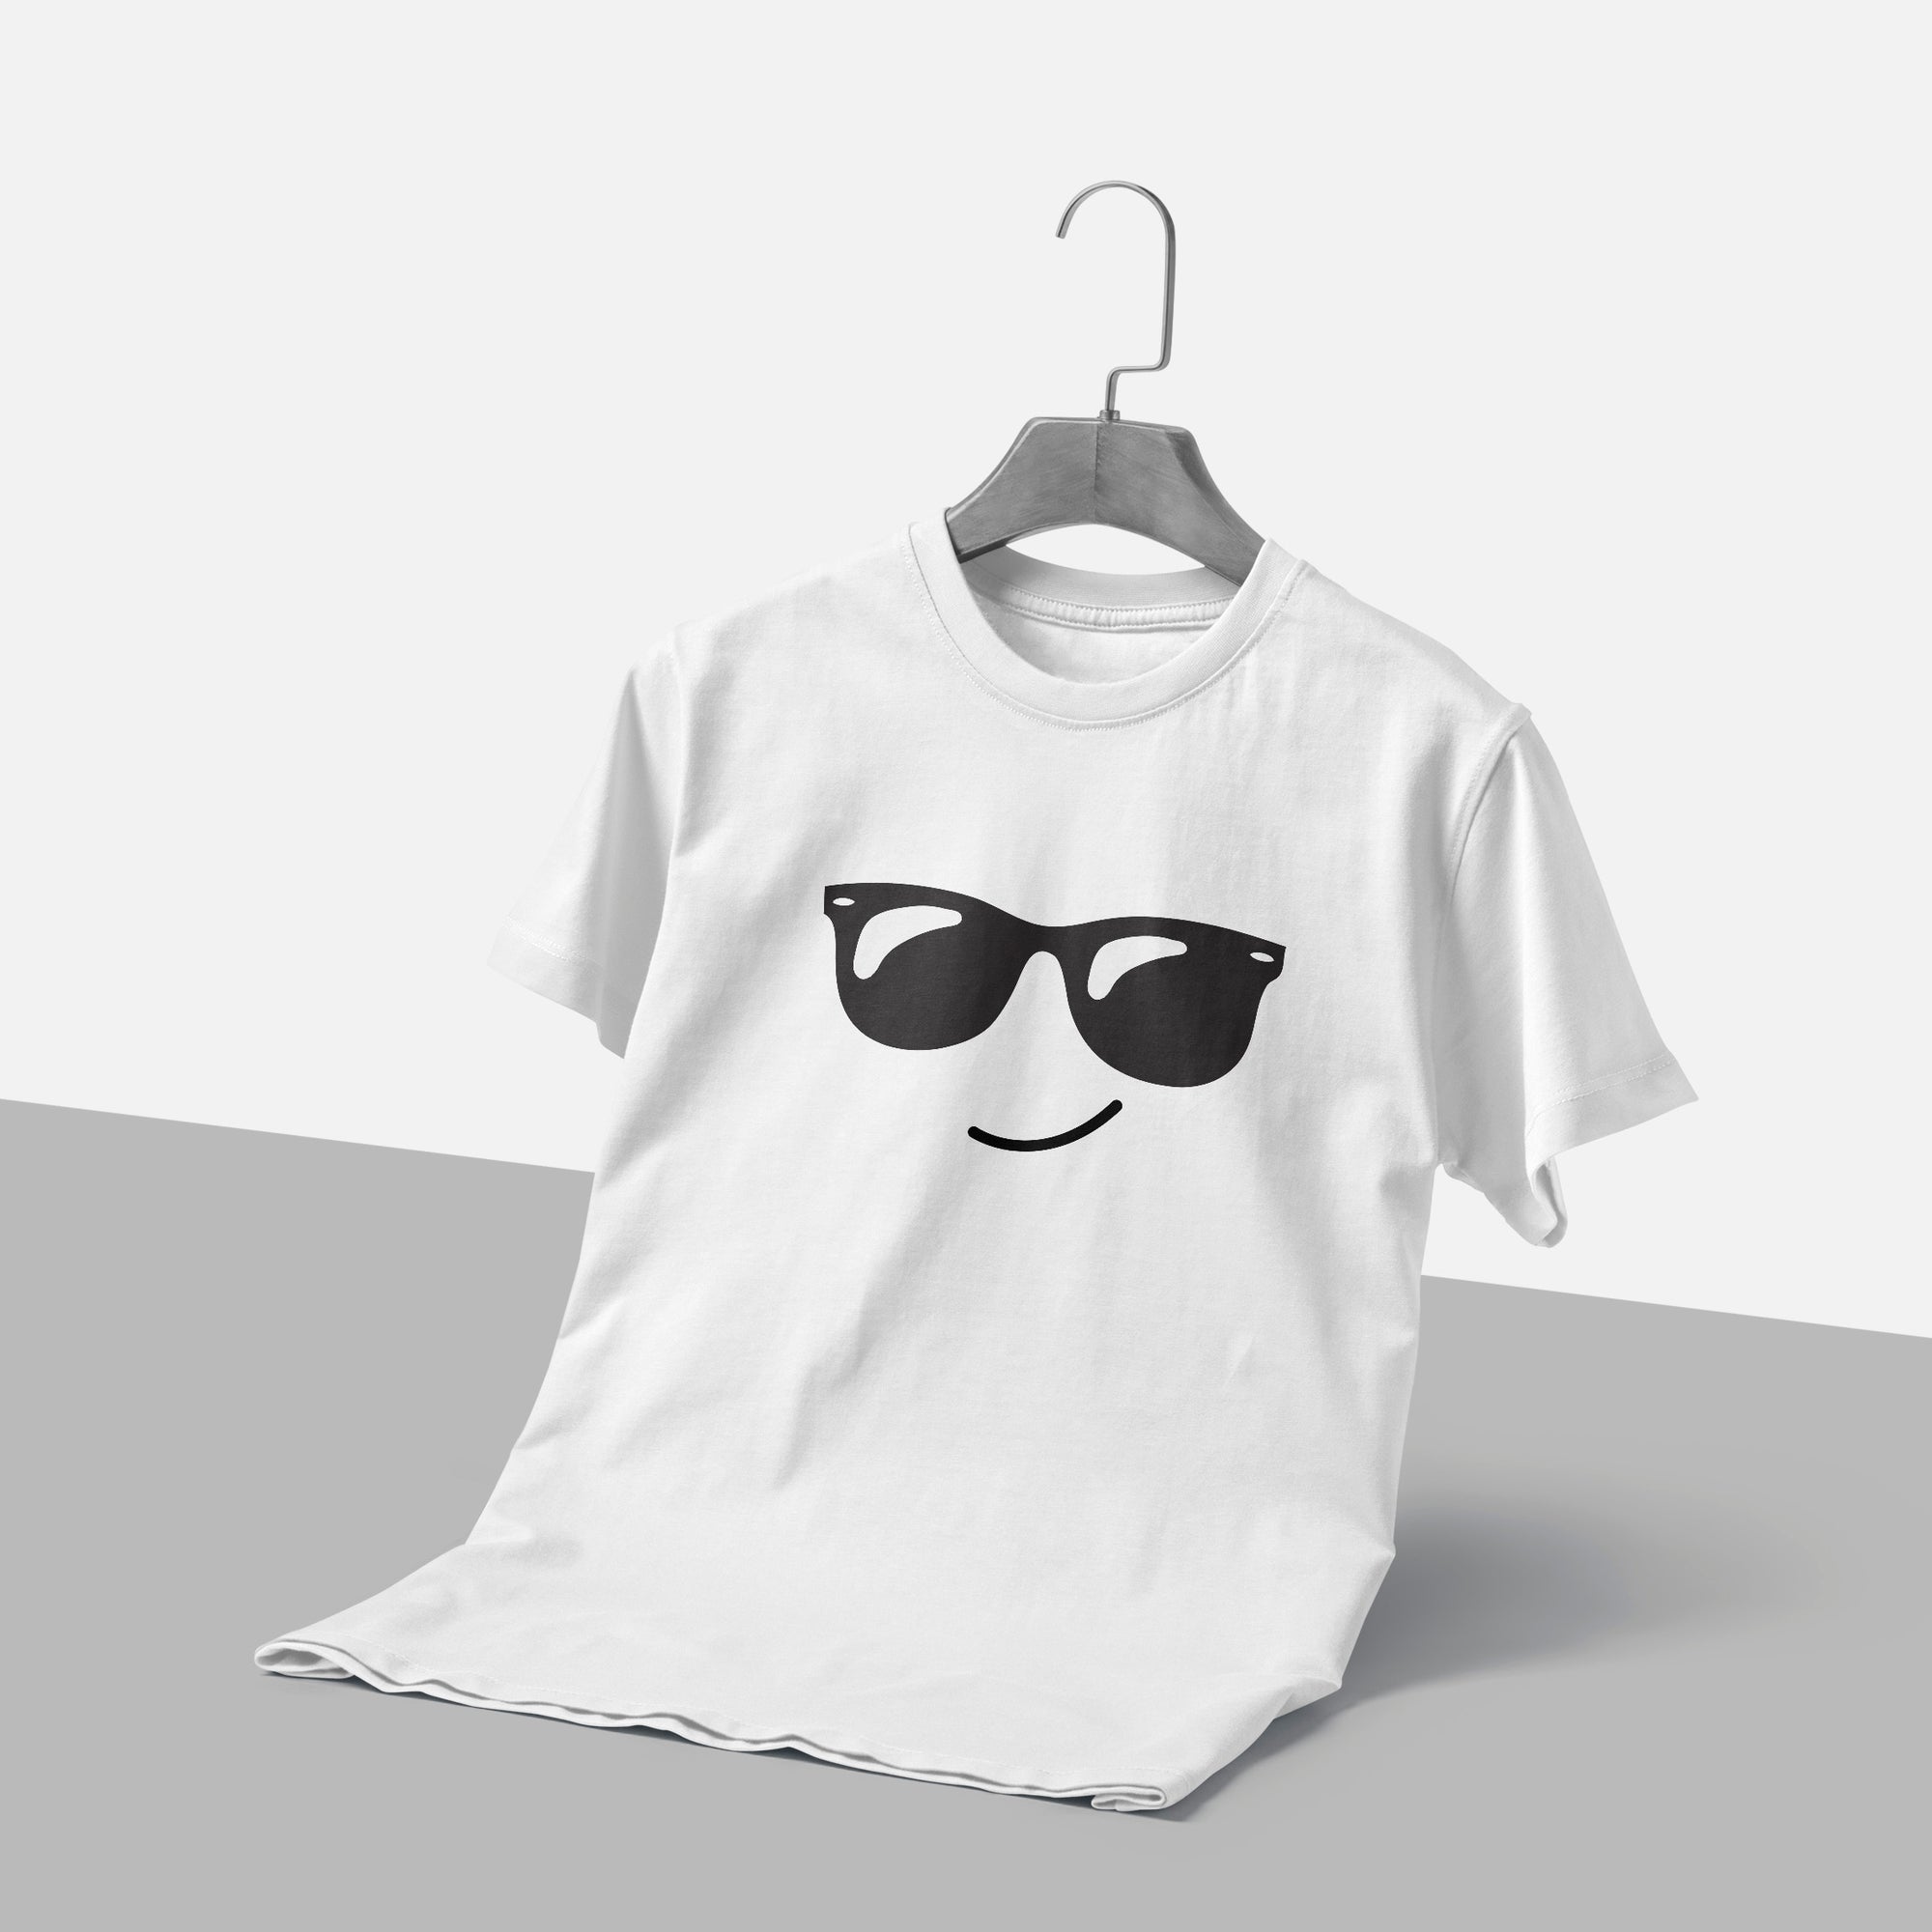 Cool Kawaii Face with Sunglasses T-Shirt